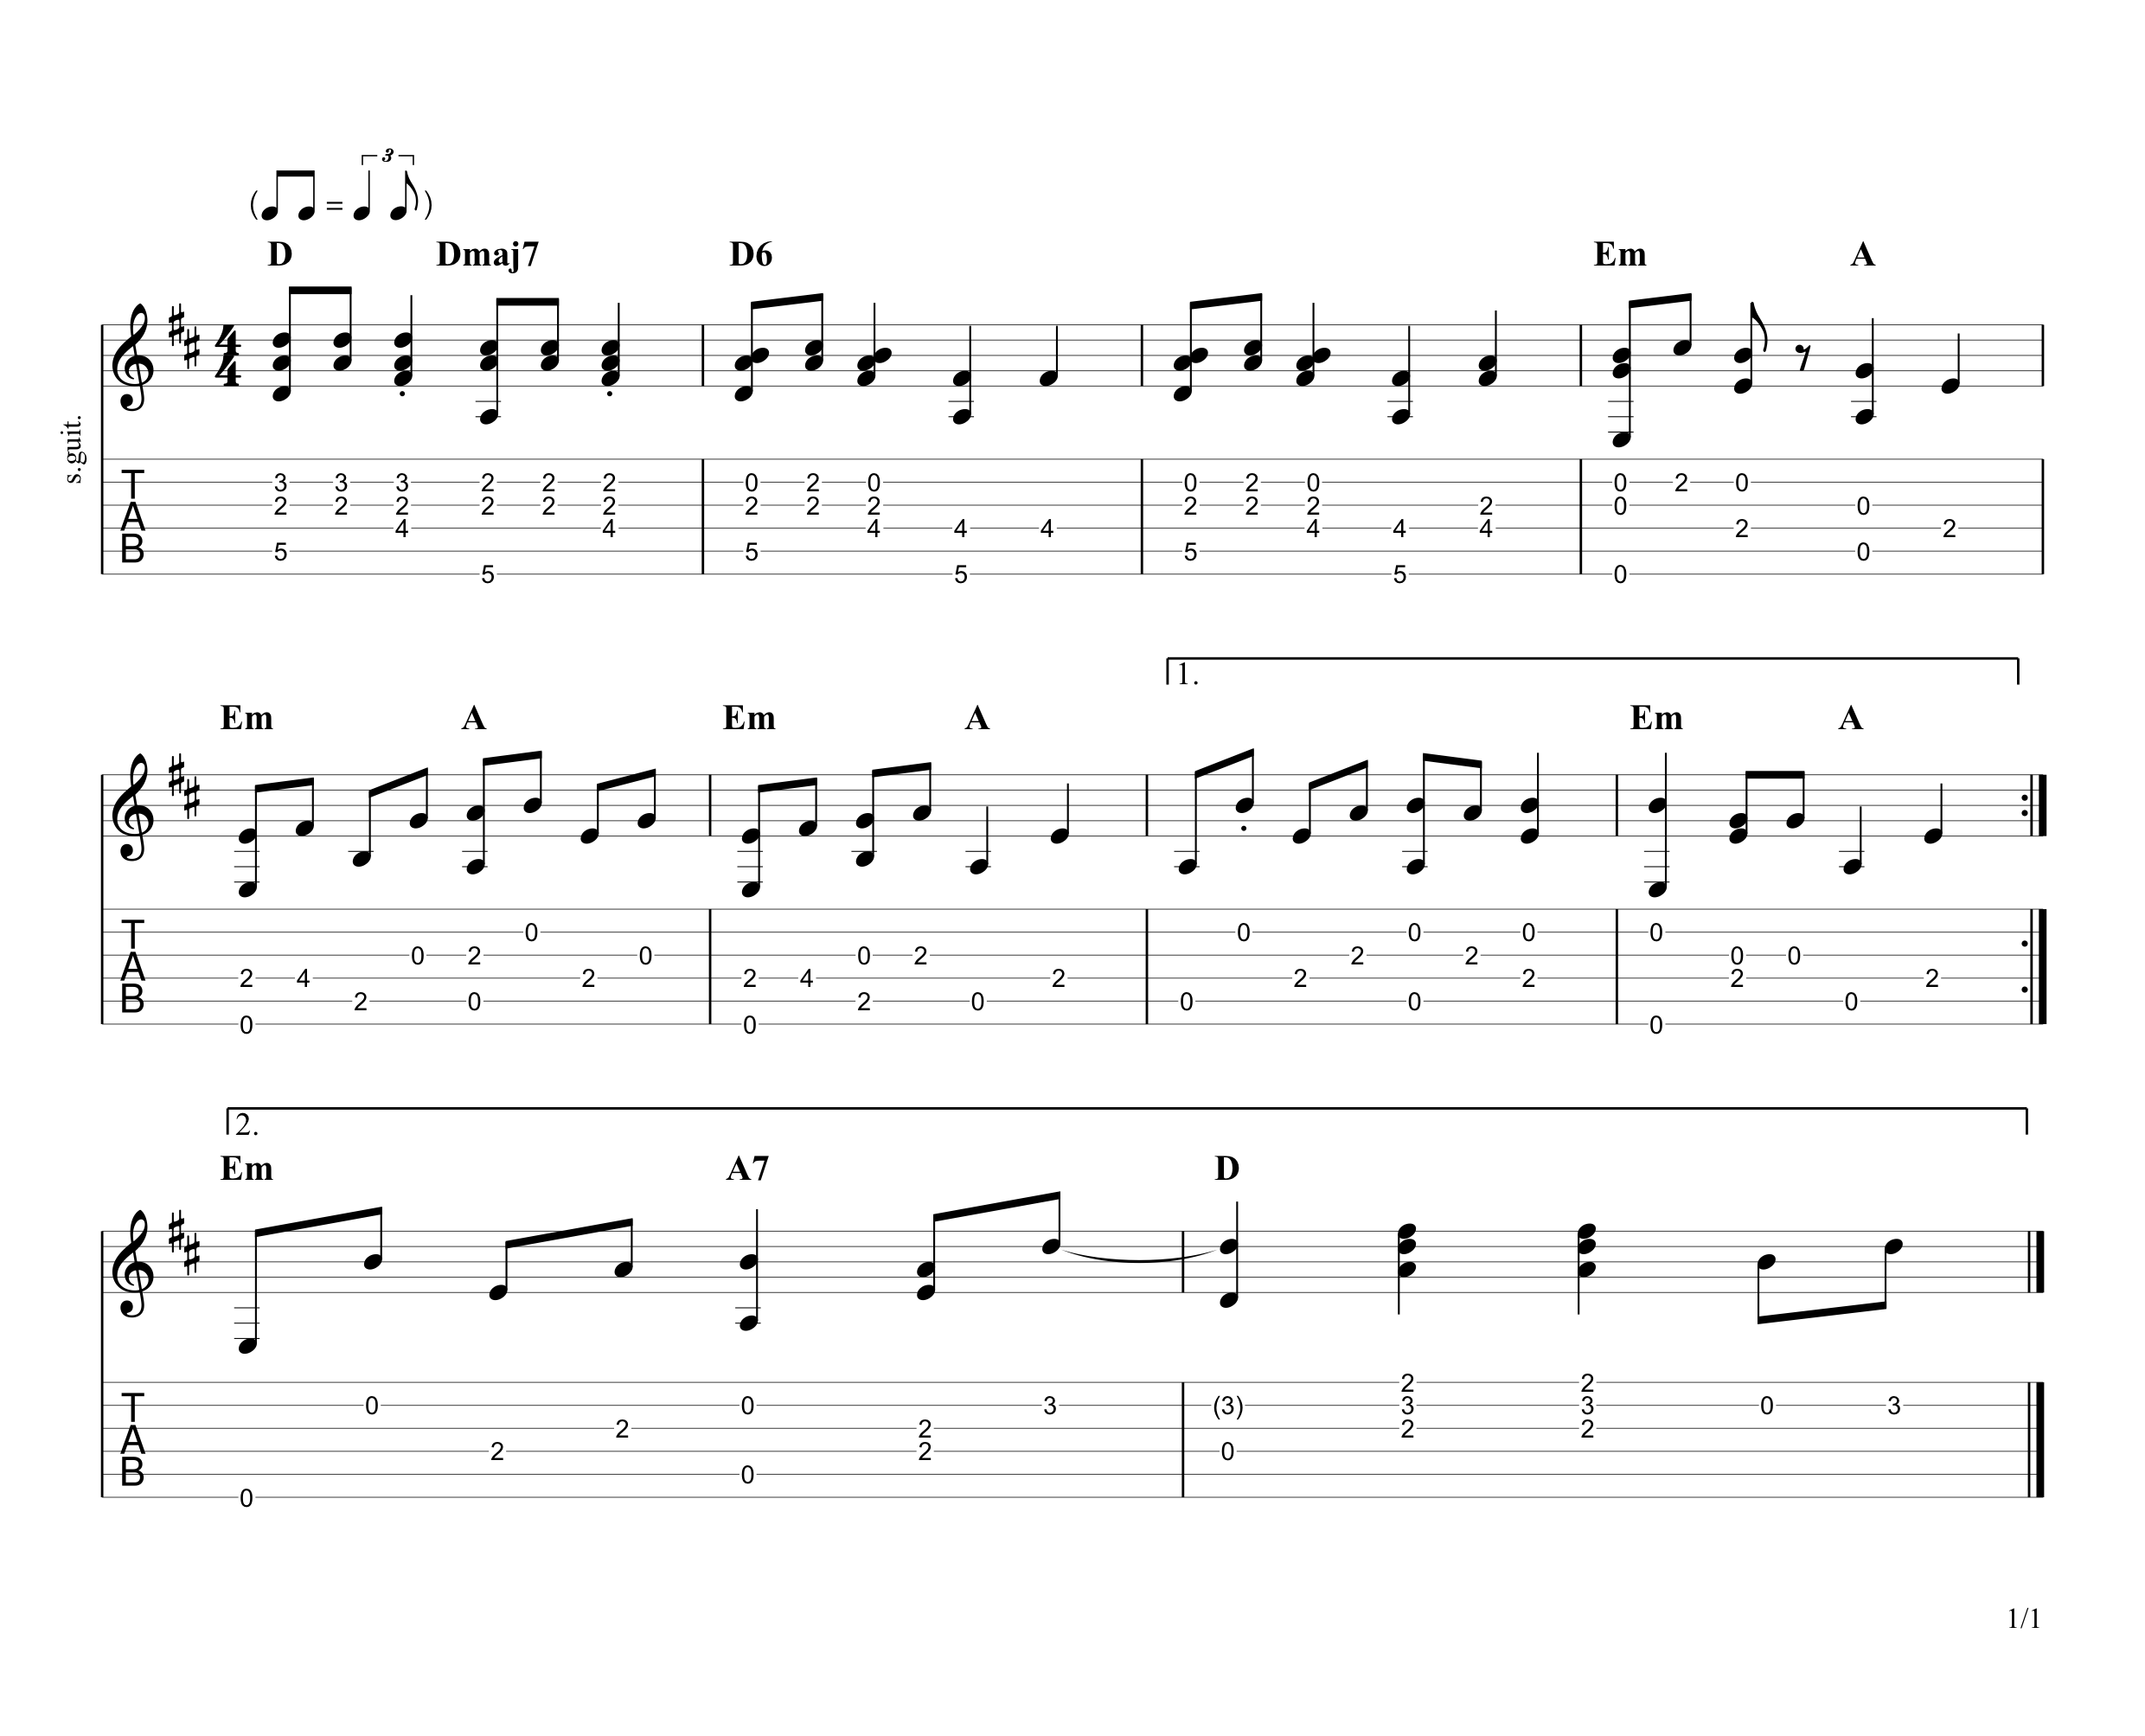 Jingle Bell Rock Chords Guitar - chords that you wish.